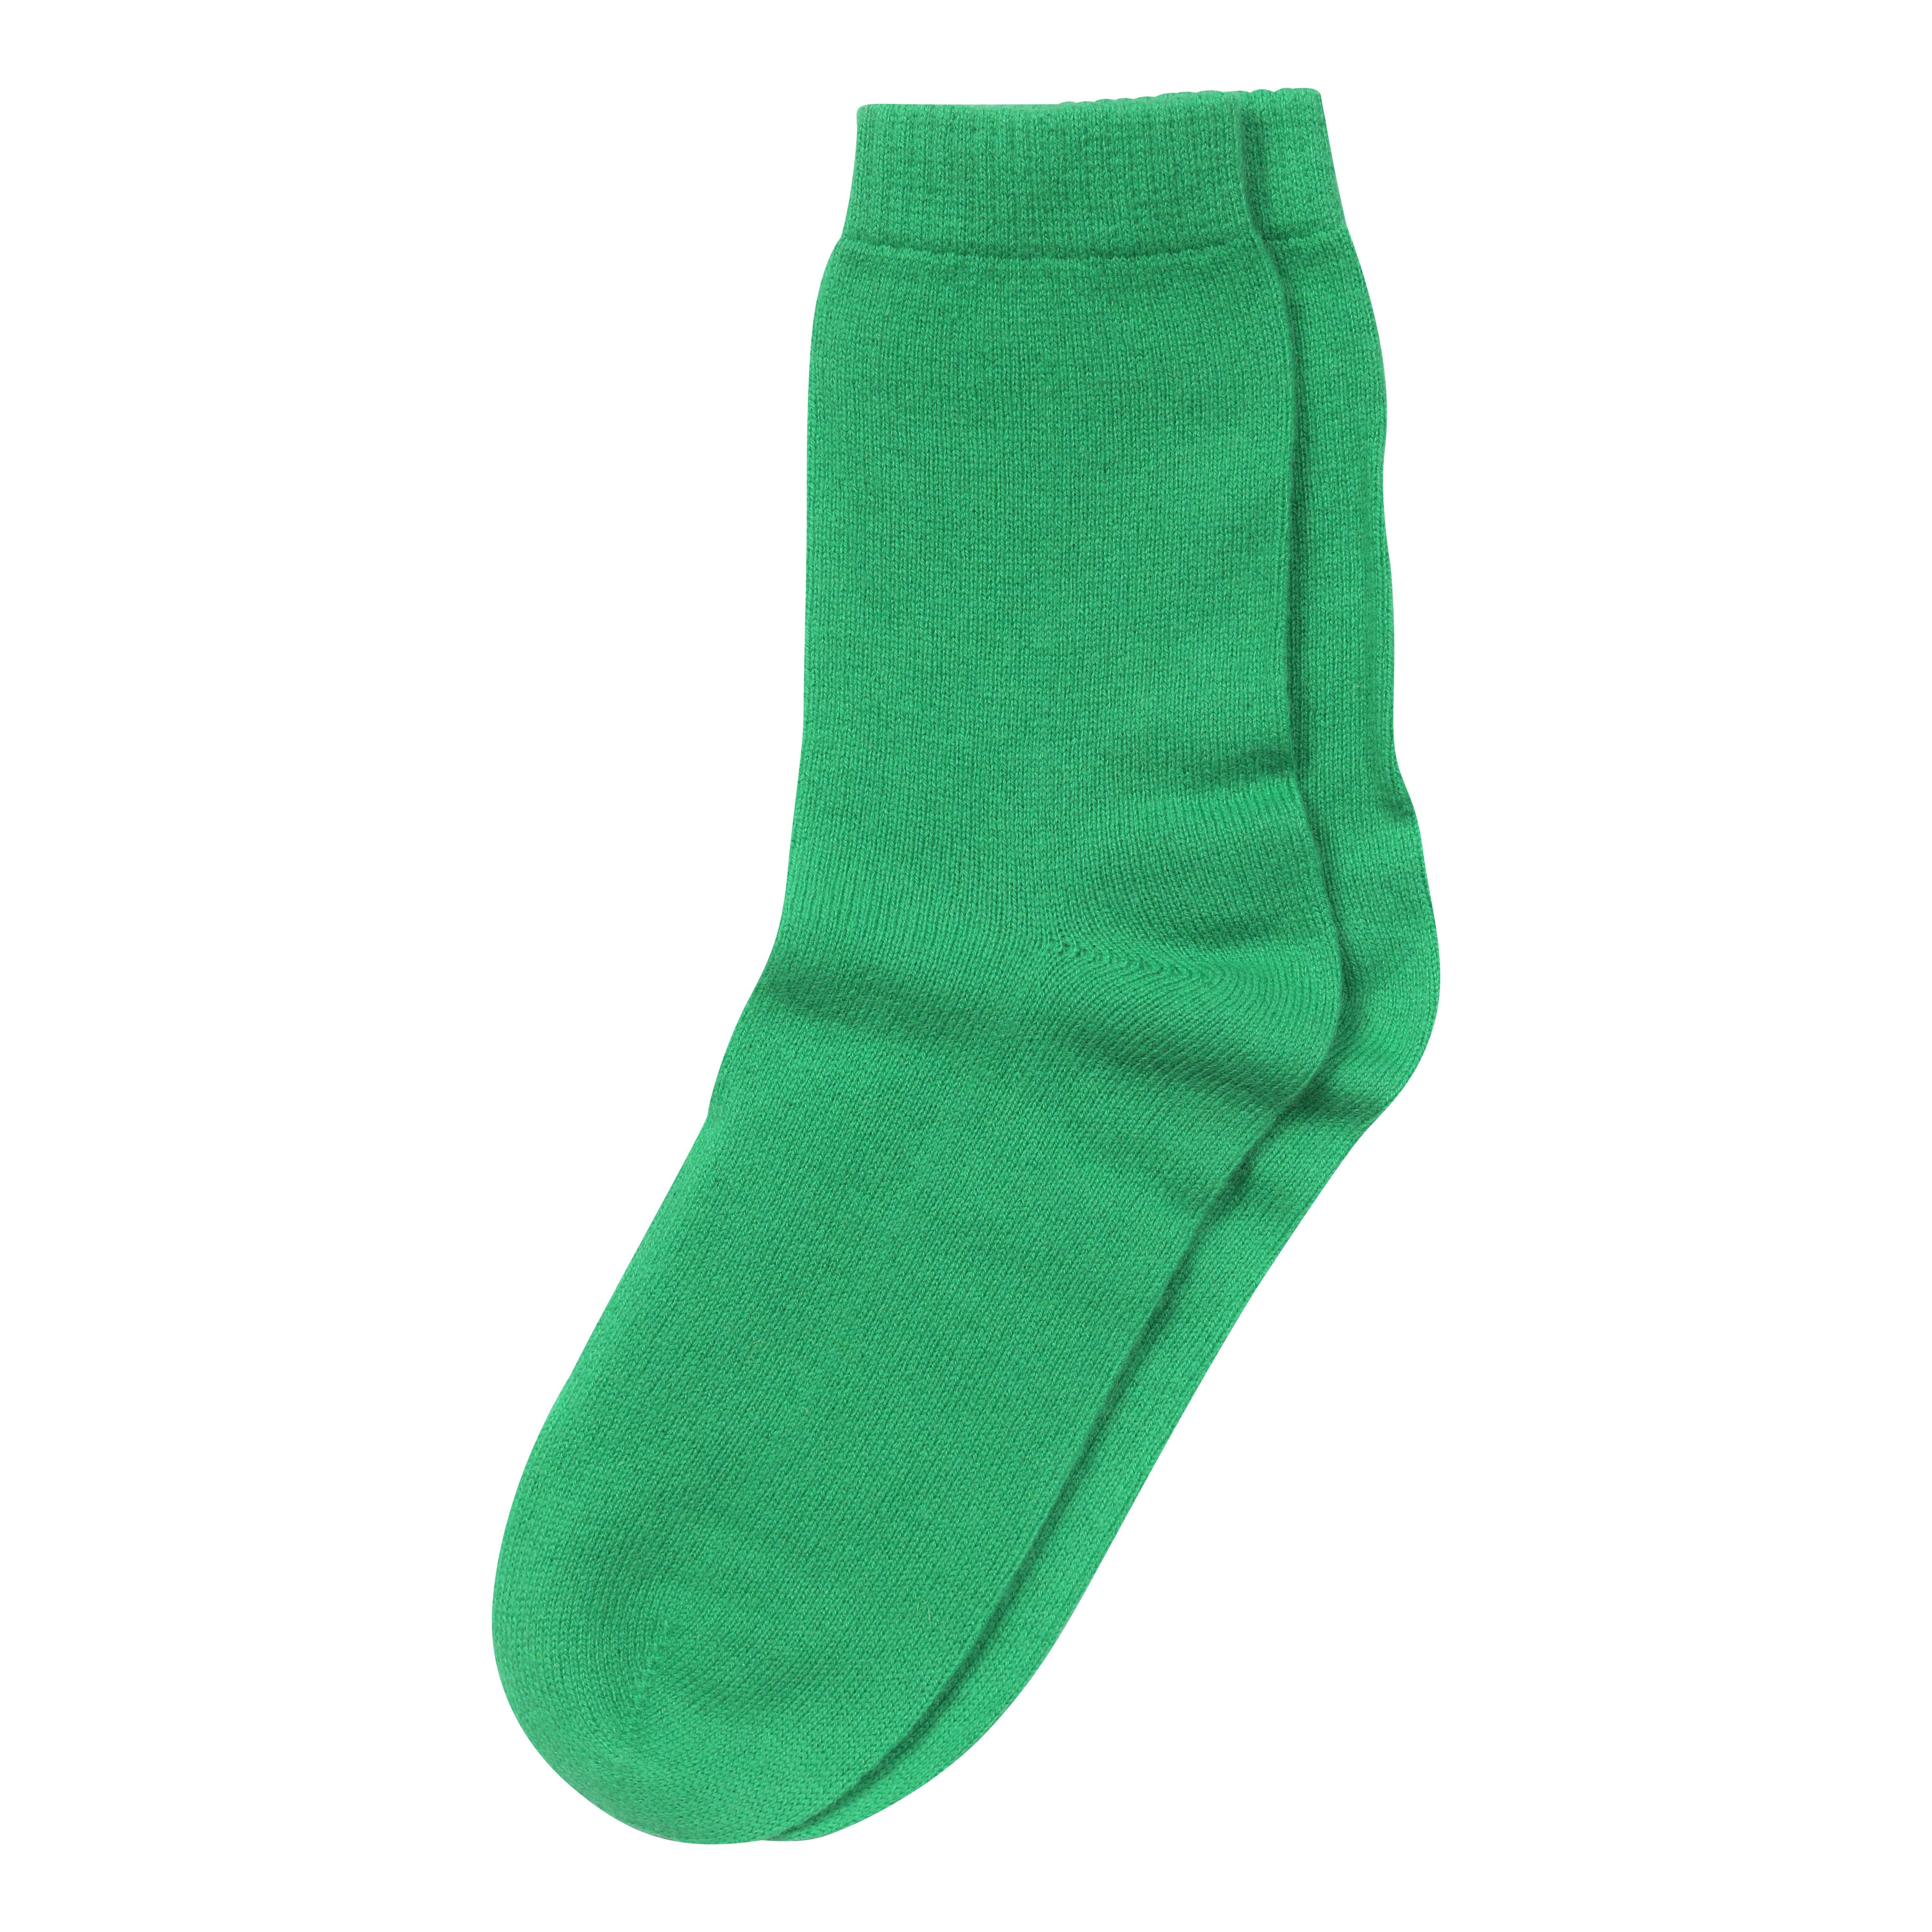 Jumper1234 Cashmere Socks in Bright Green